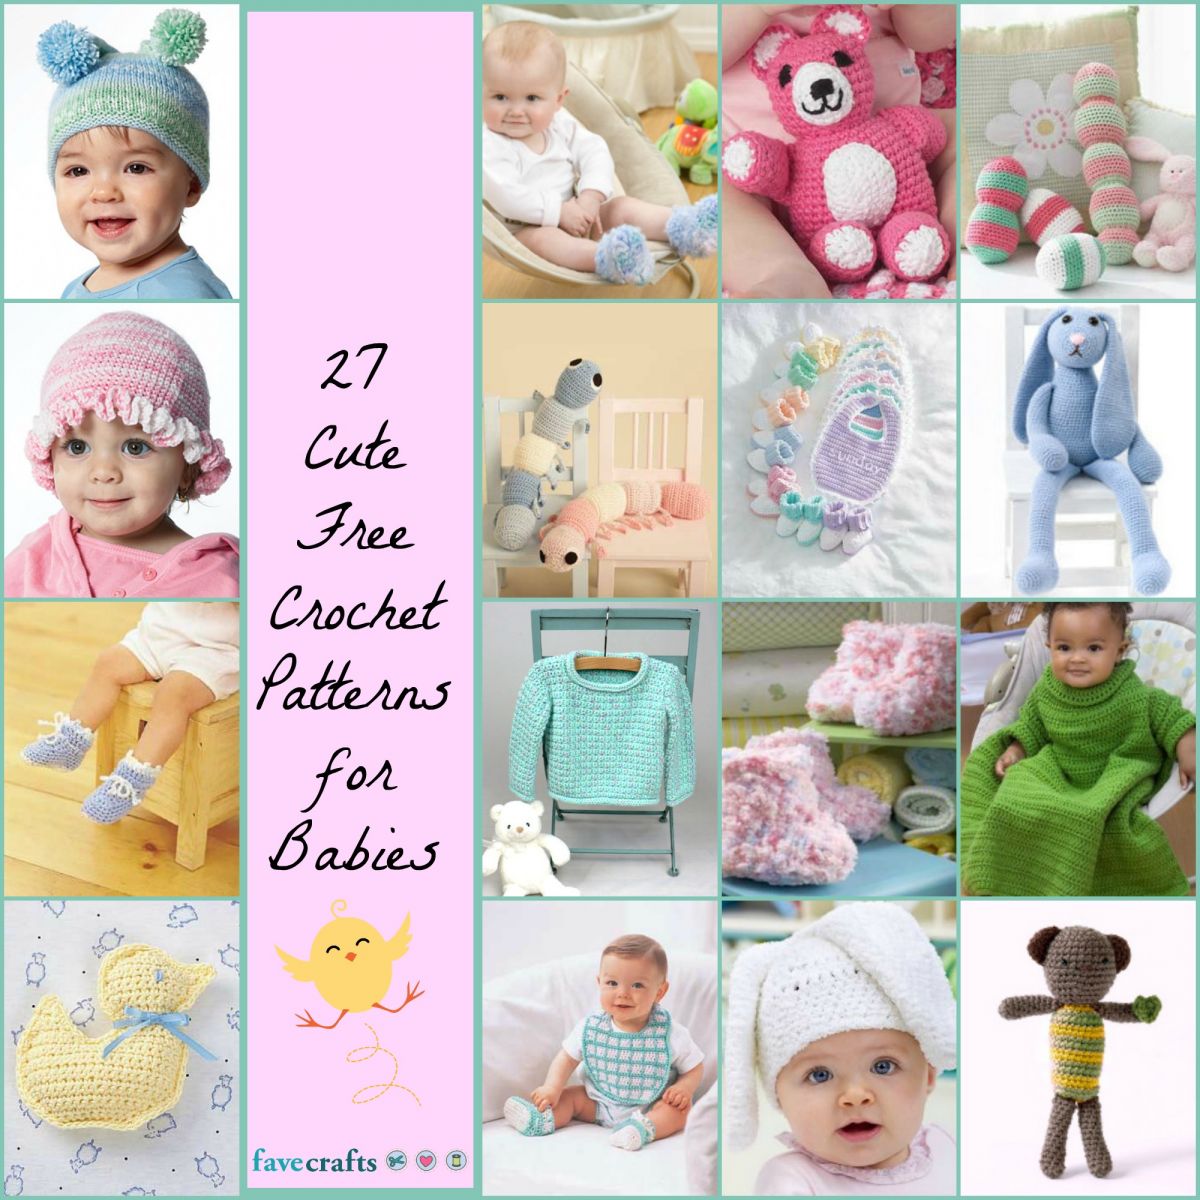 http://www.favequilts.com/master_images/Crochet/crochet-patterns-for-babies.jpg